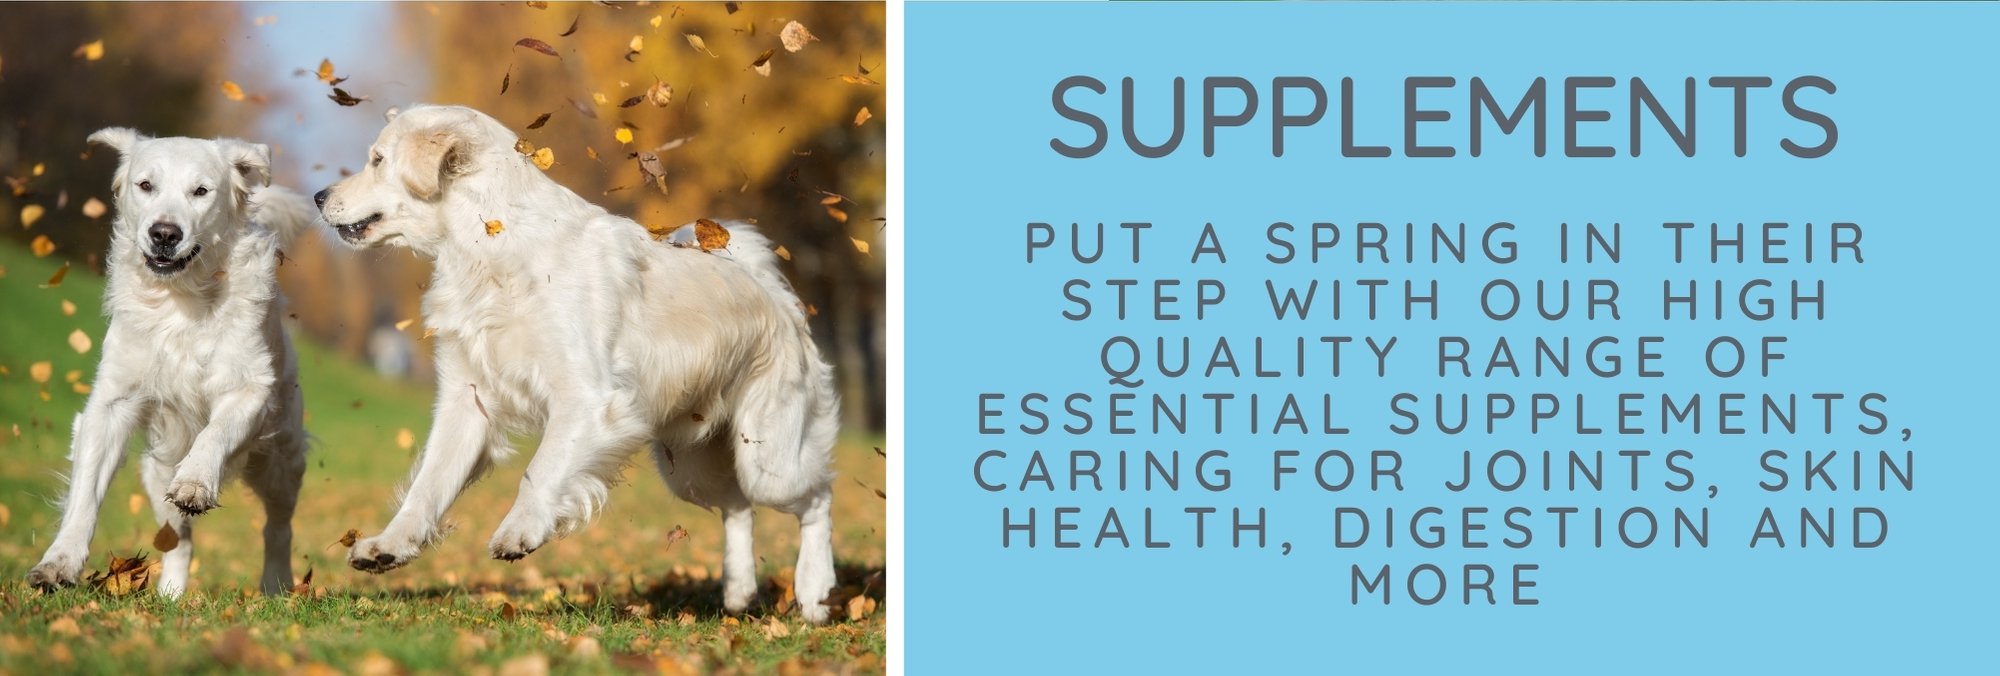 Website Banner Health Supplements Dogs